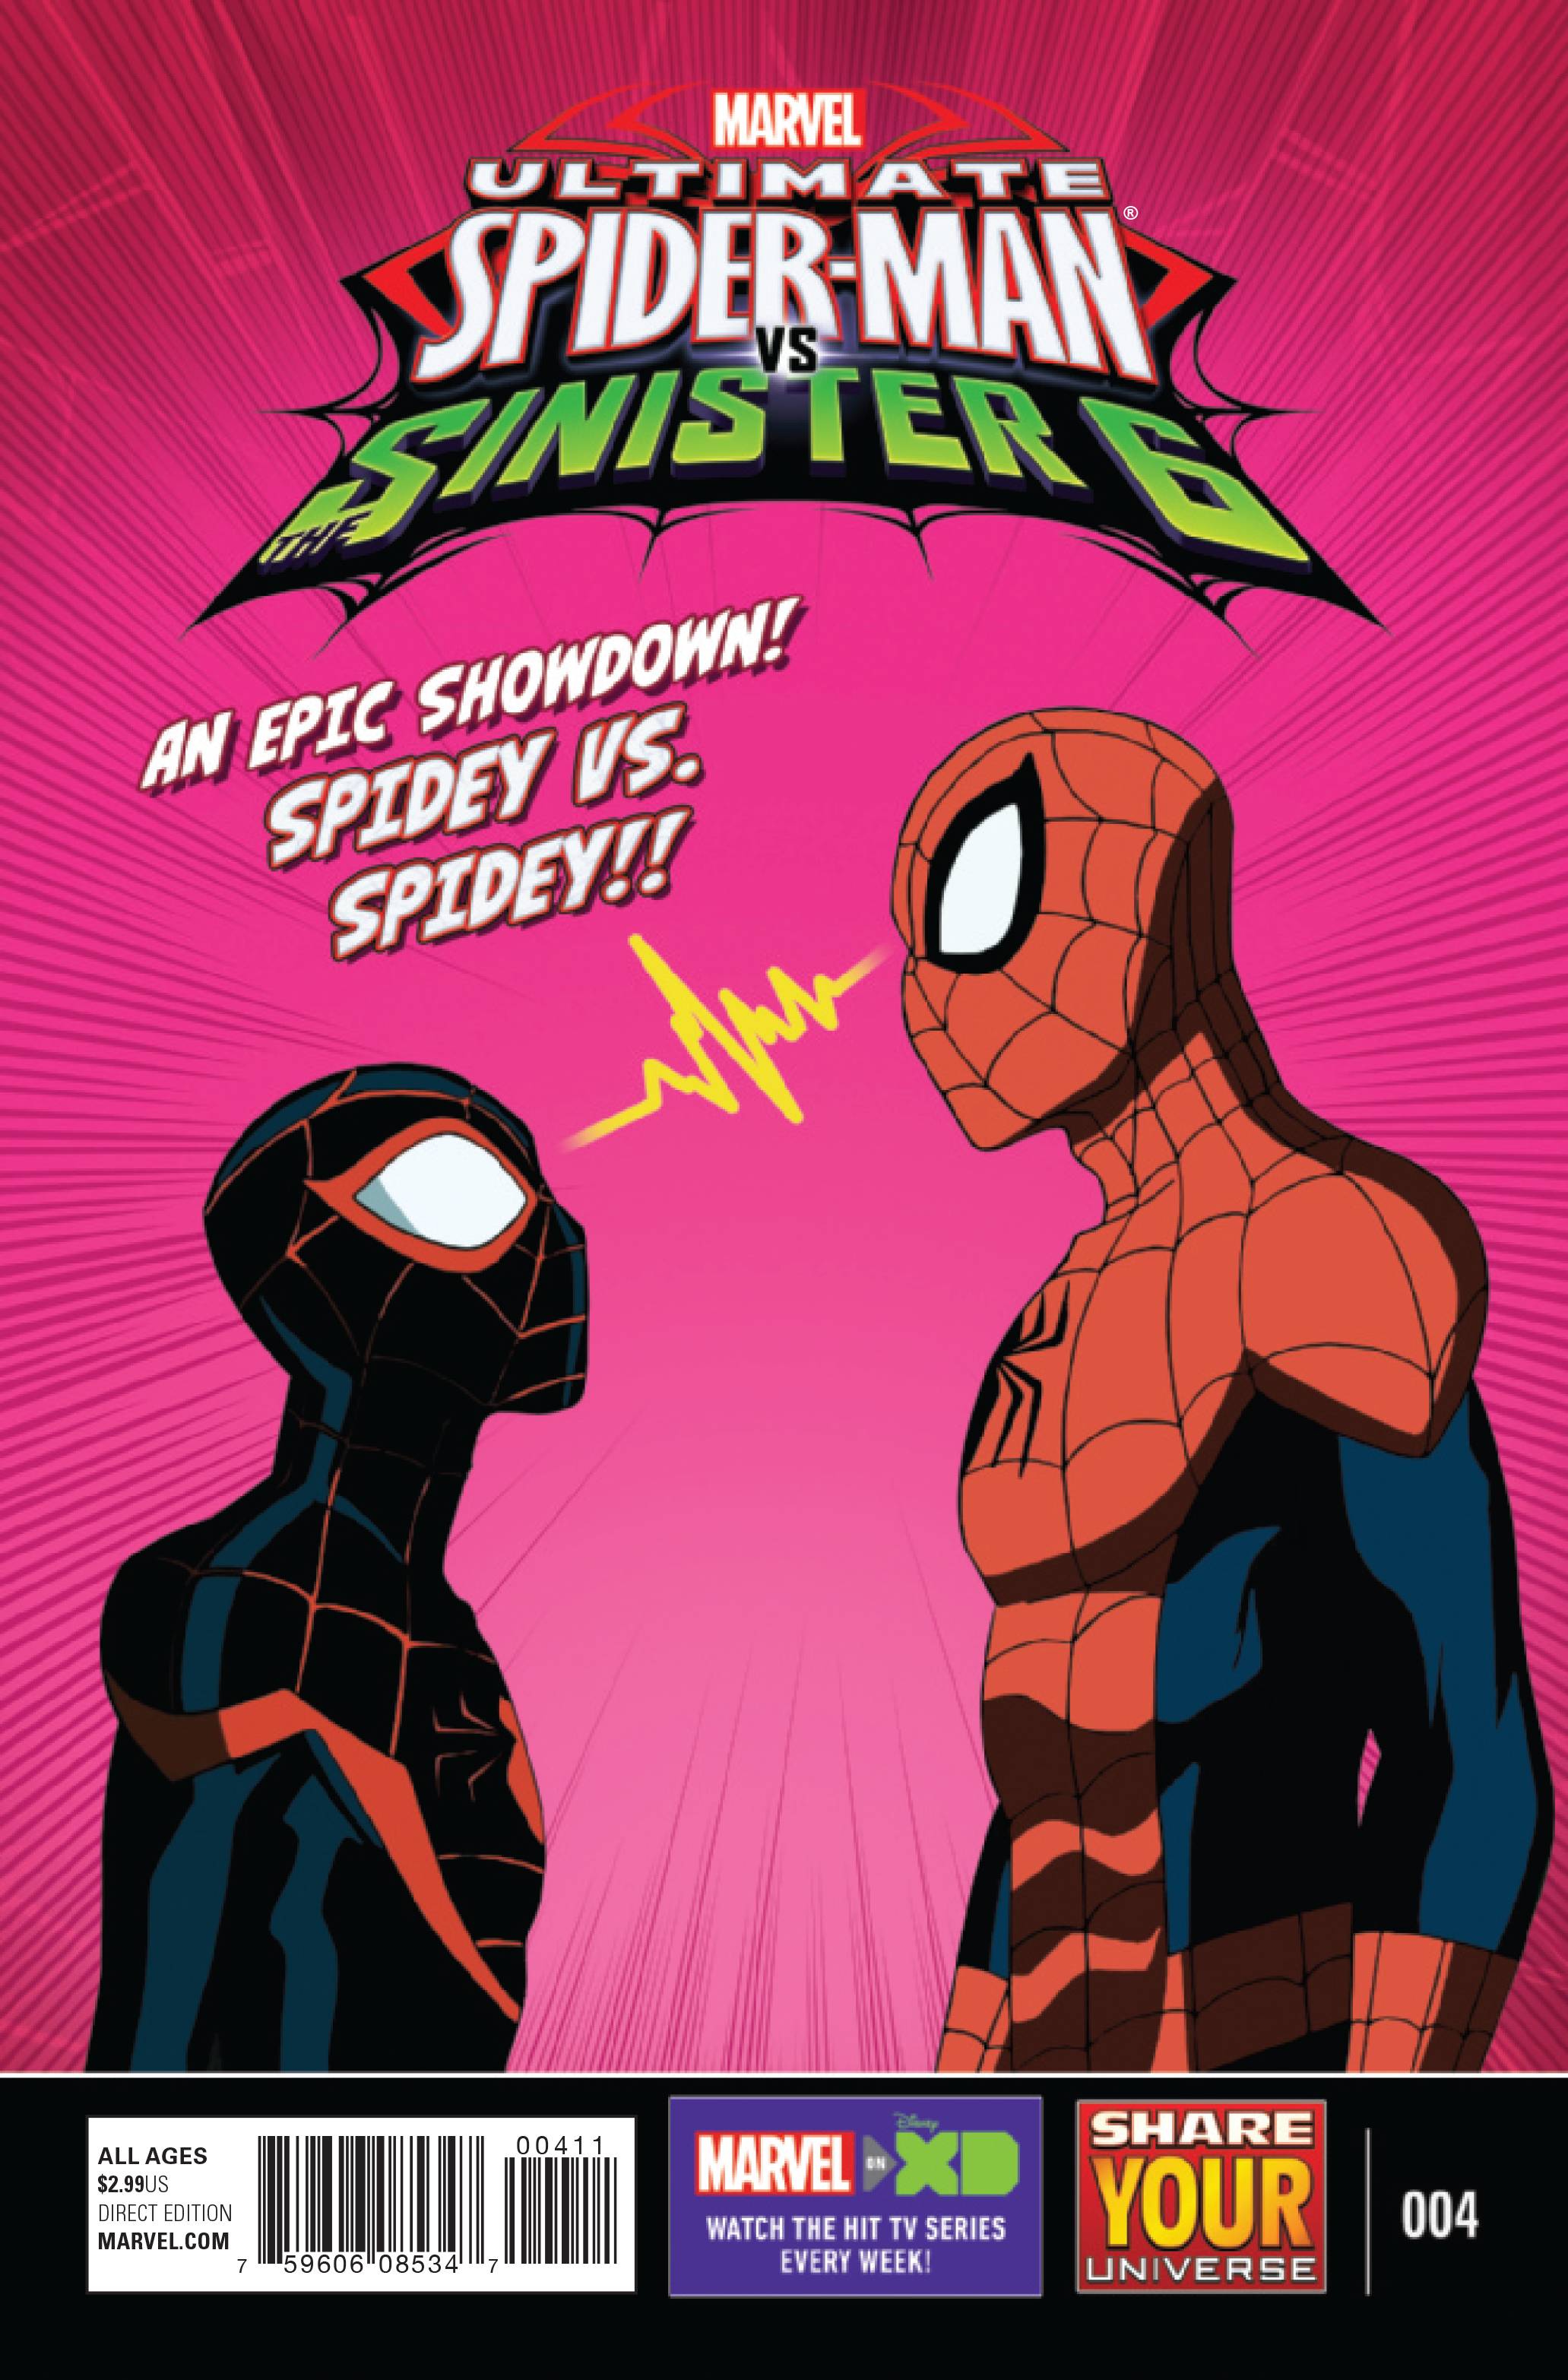 MARVEL UNIVERSE ULT SPIDER-MAN VS SINISTER SIX #4